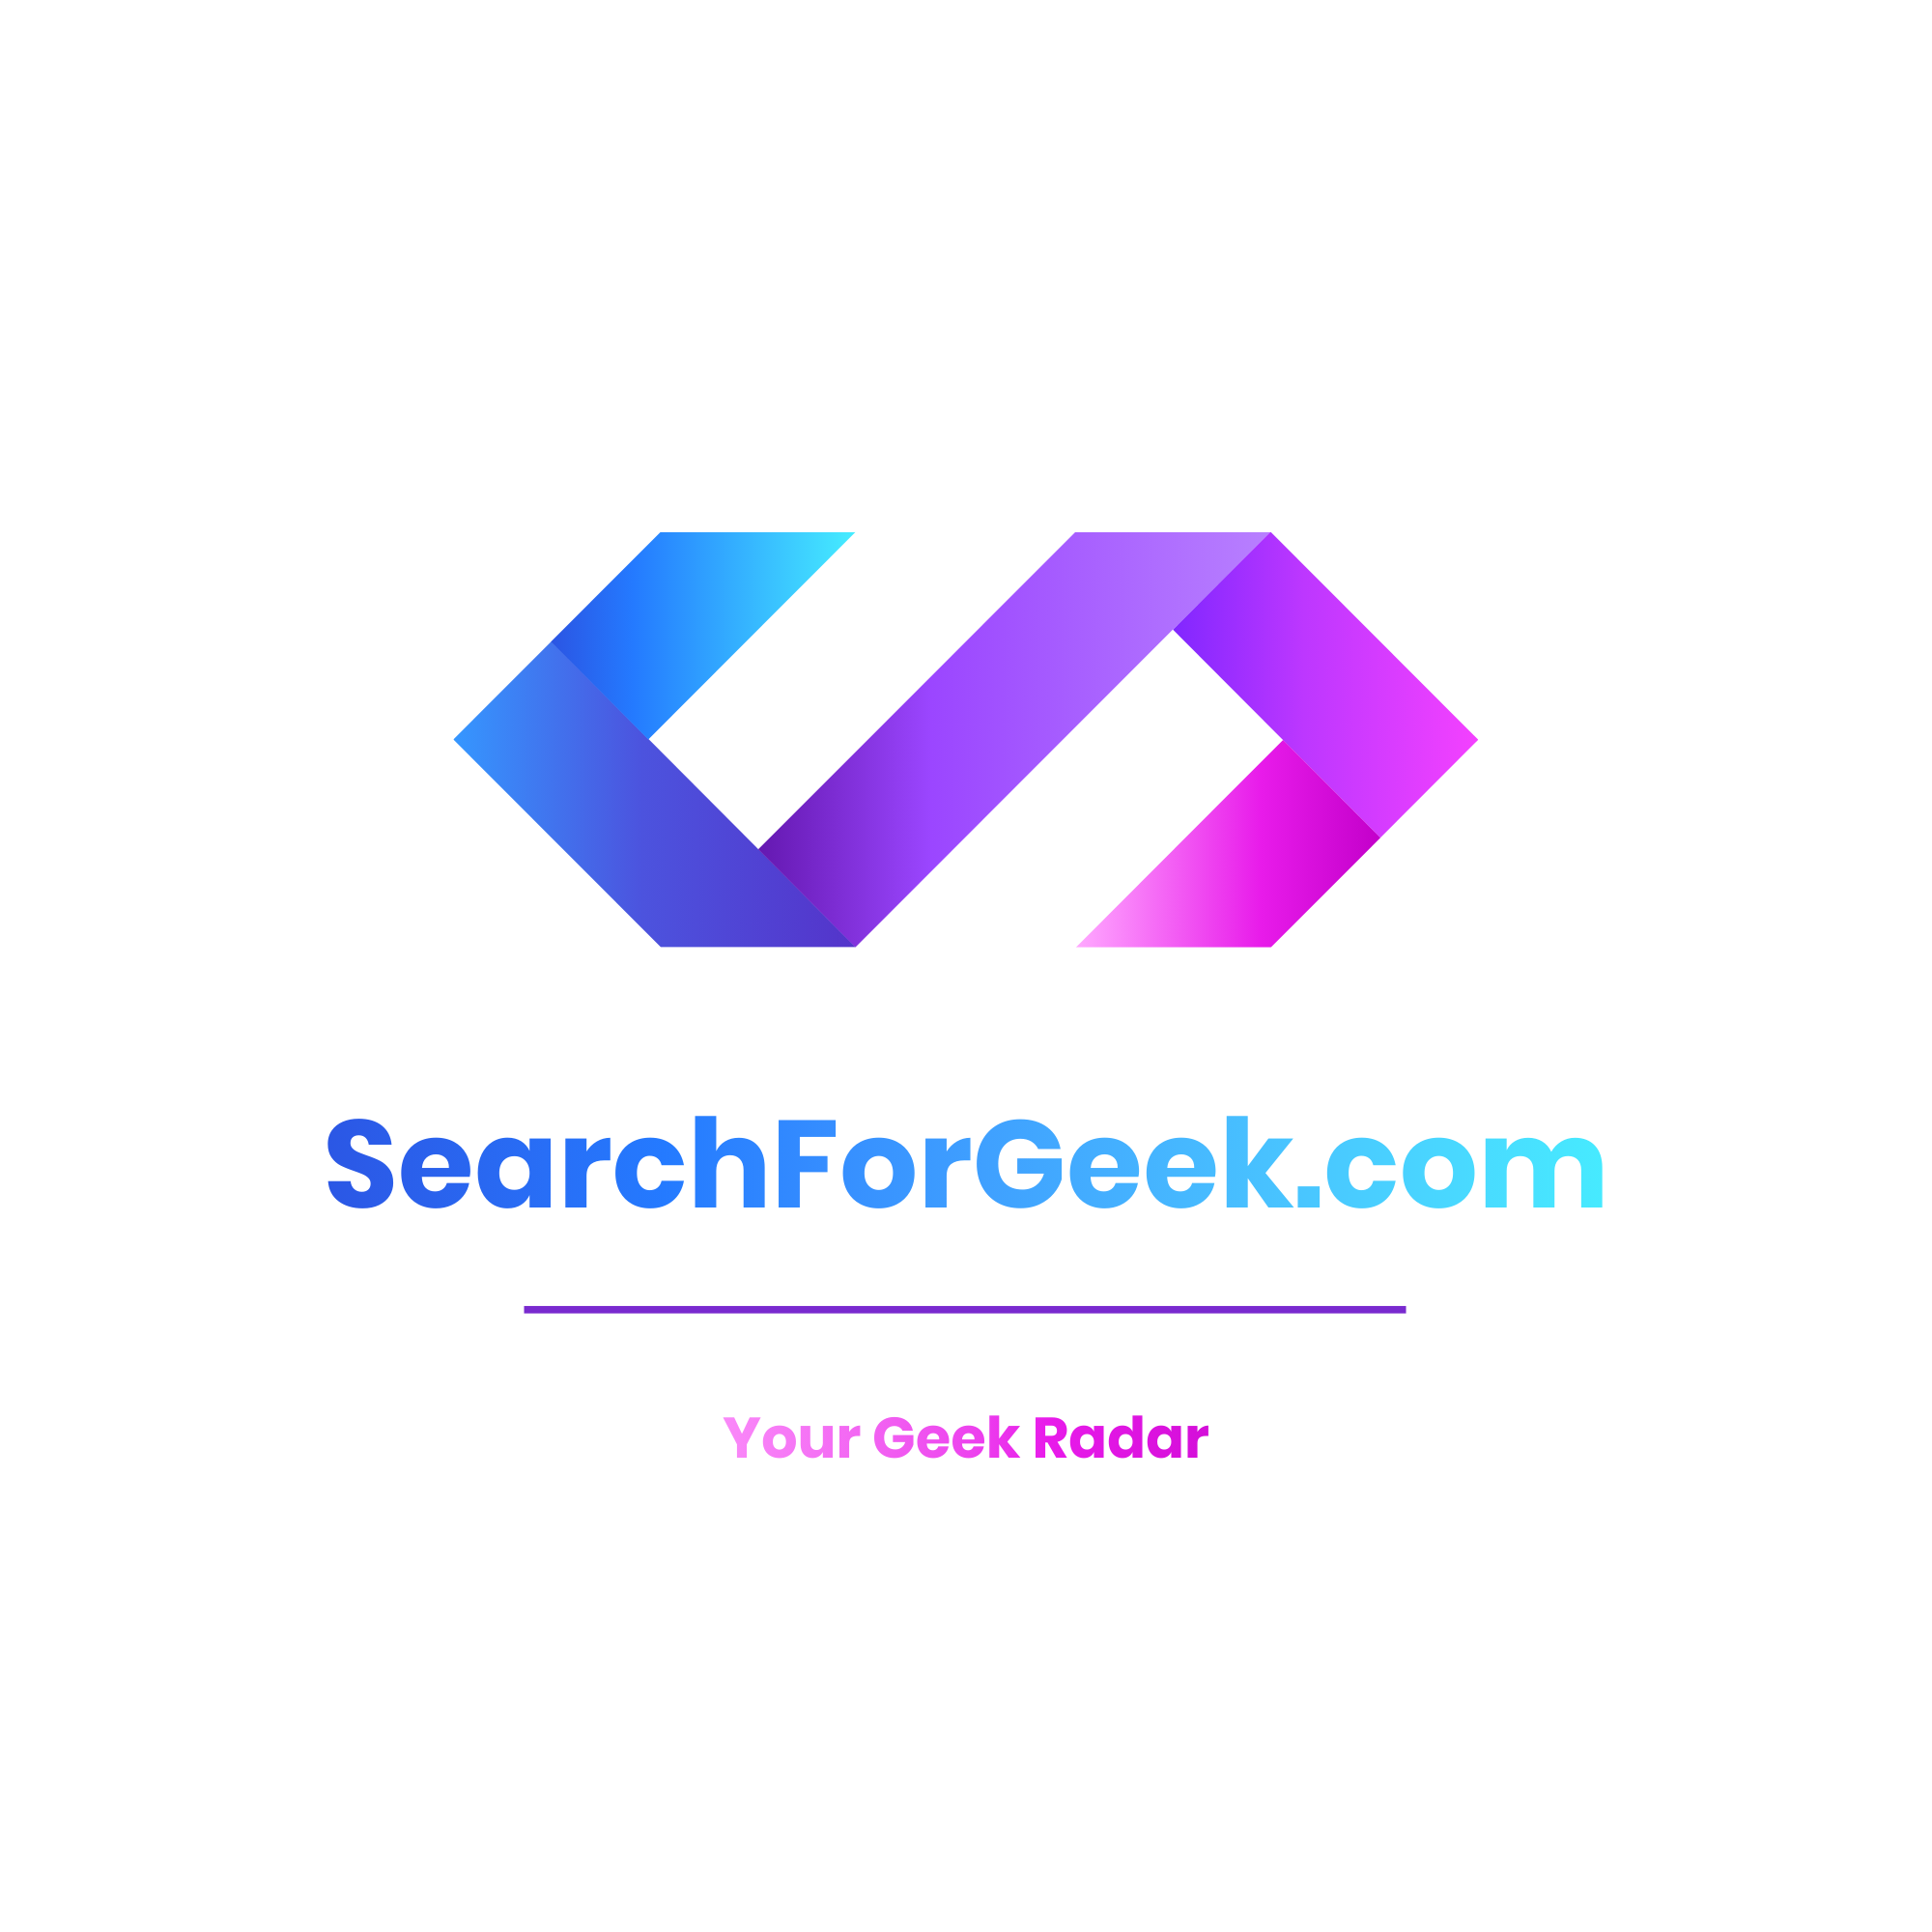 SearchForGeek.com